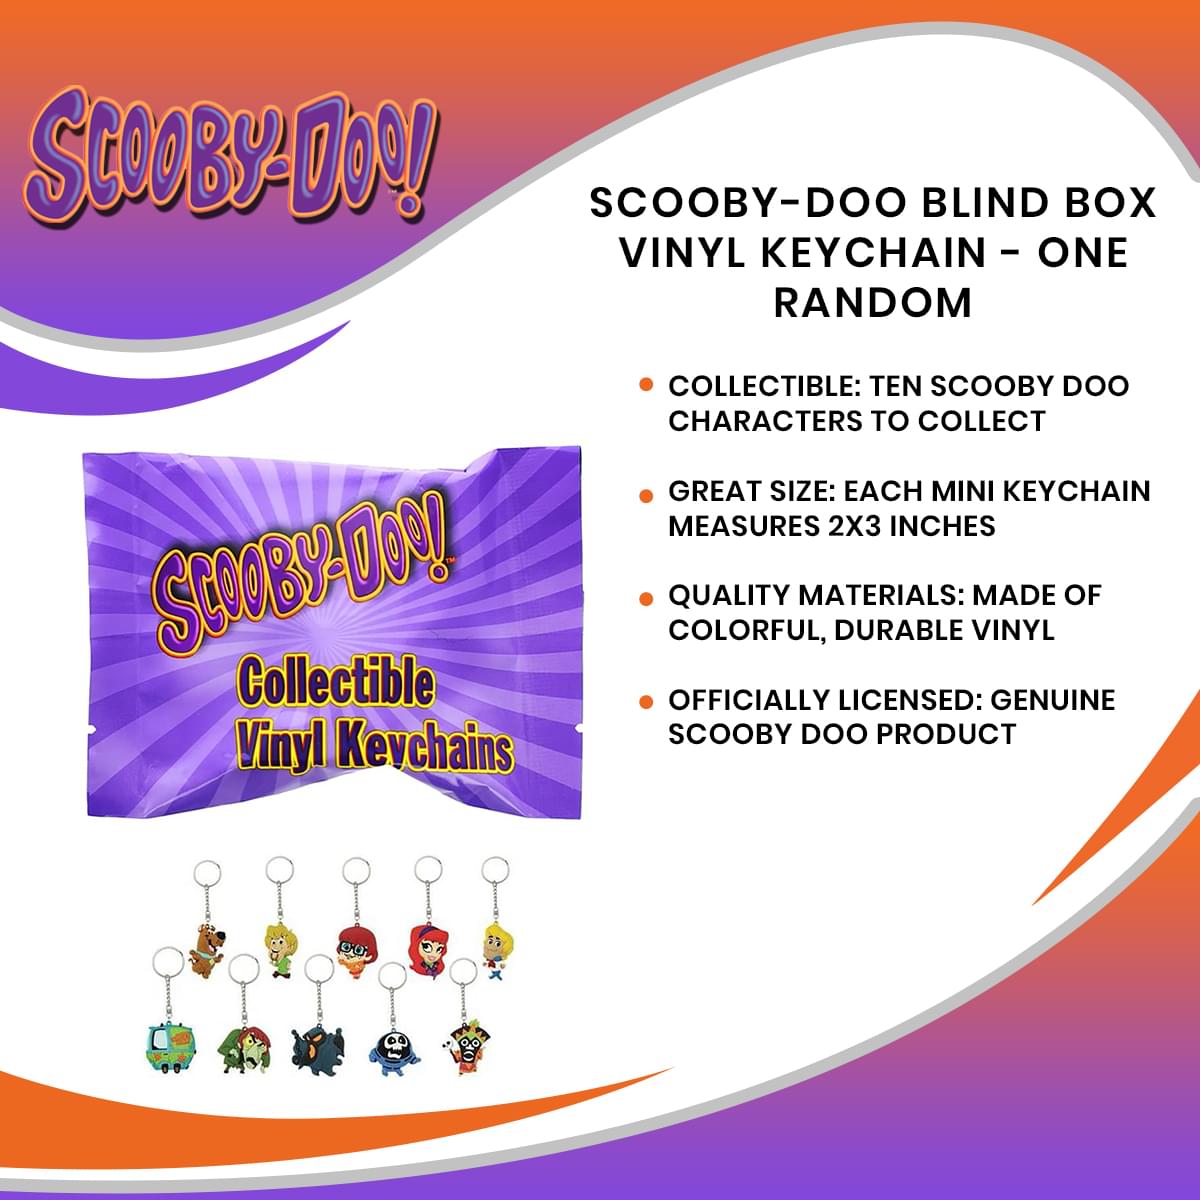 Scooby-Doo Blind Box Vinyl Keychain - One Random